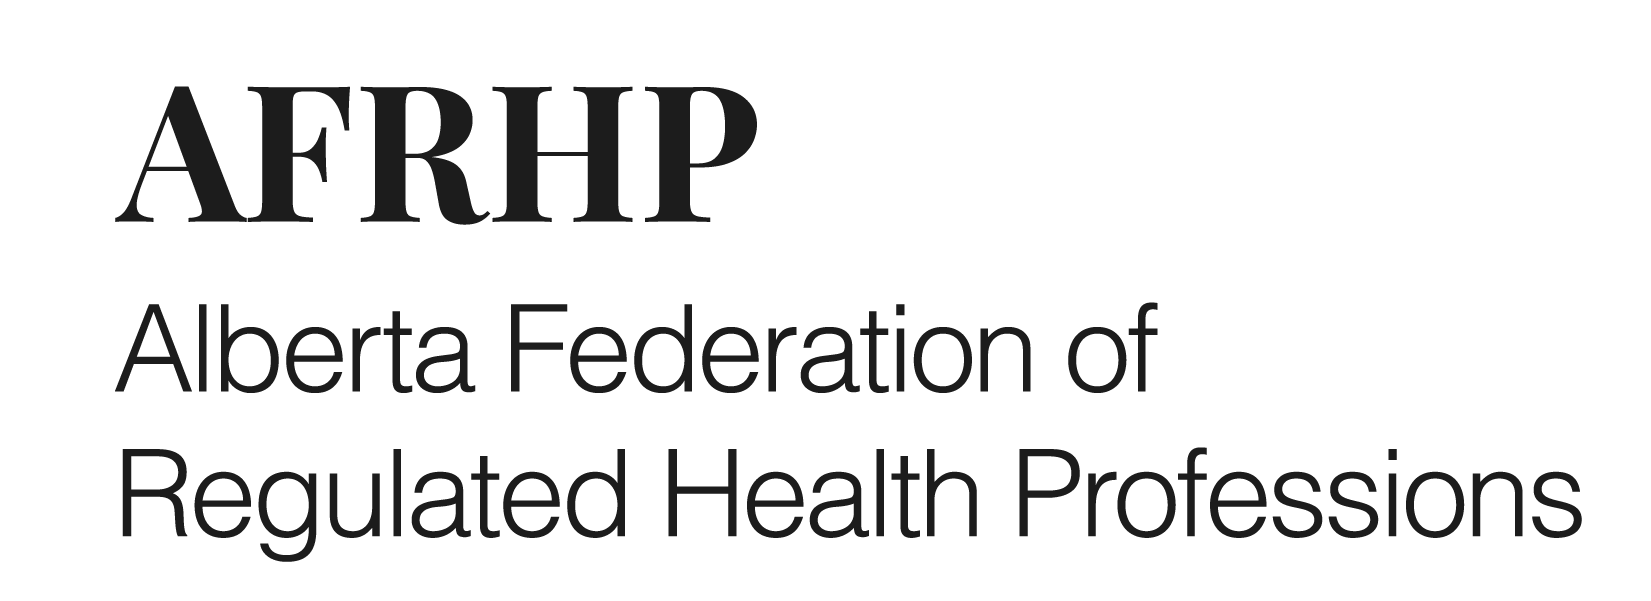 Alberta Federation of Regulatory Health Professionals